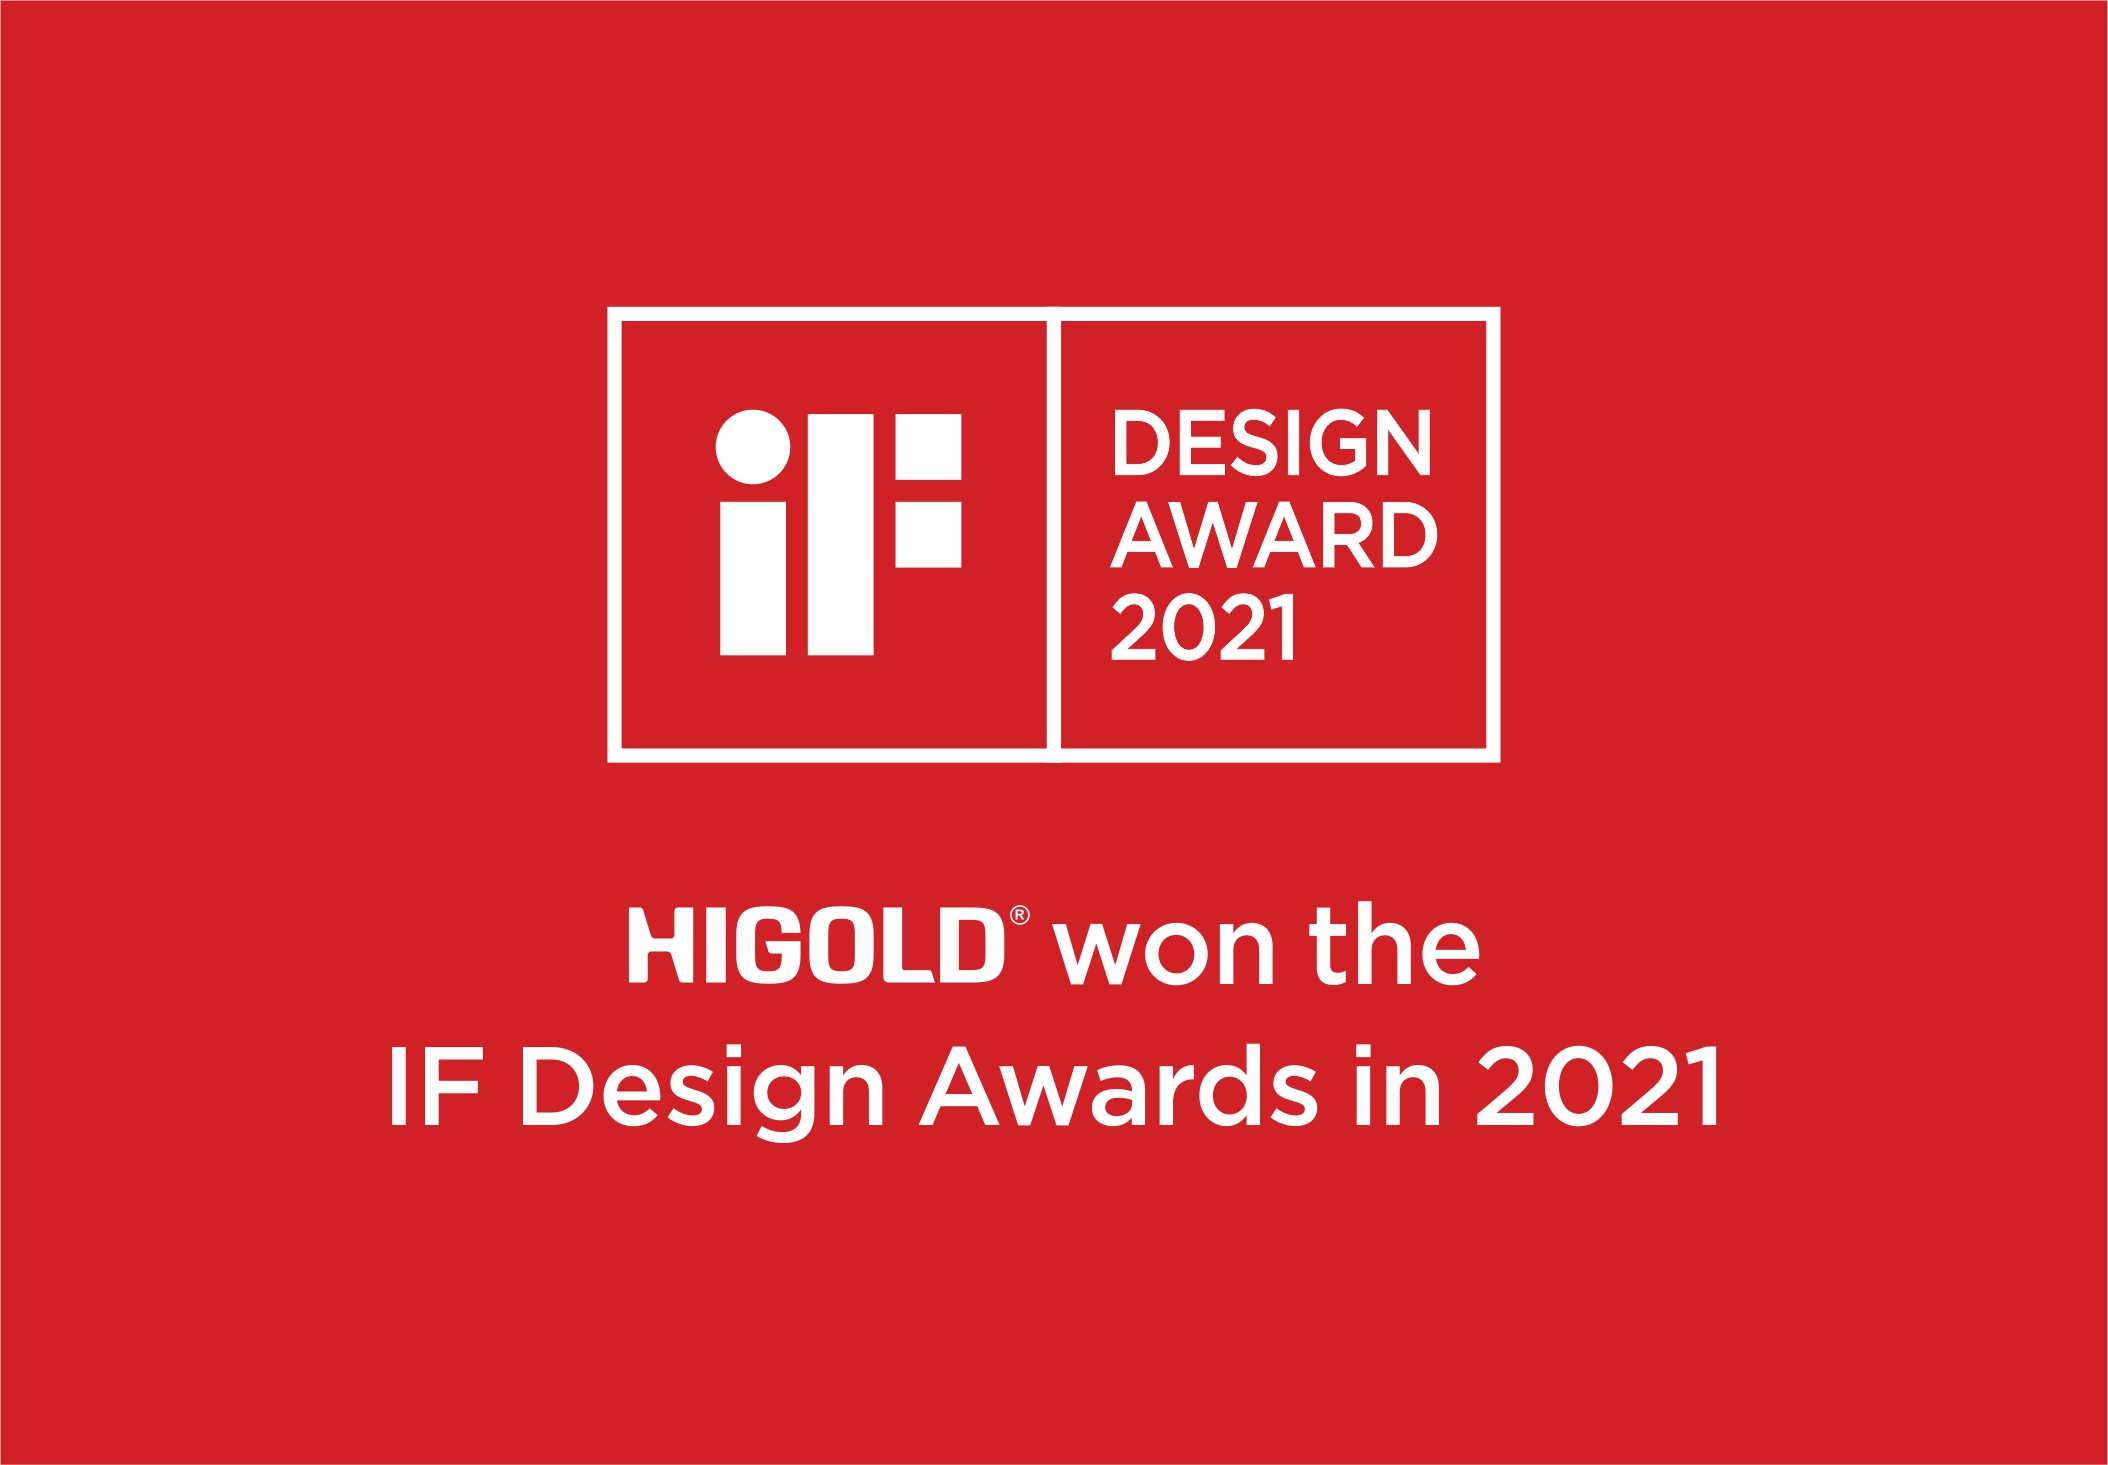 Higold won two 2021 iF Design Awards and 2021 Red Dot Design Award